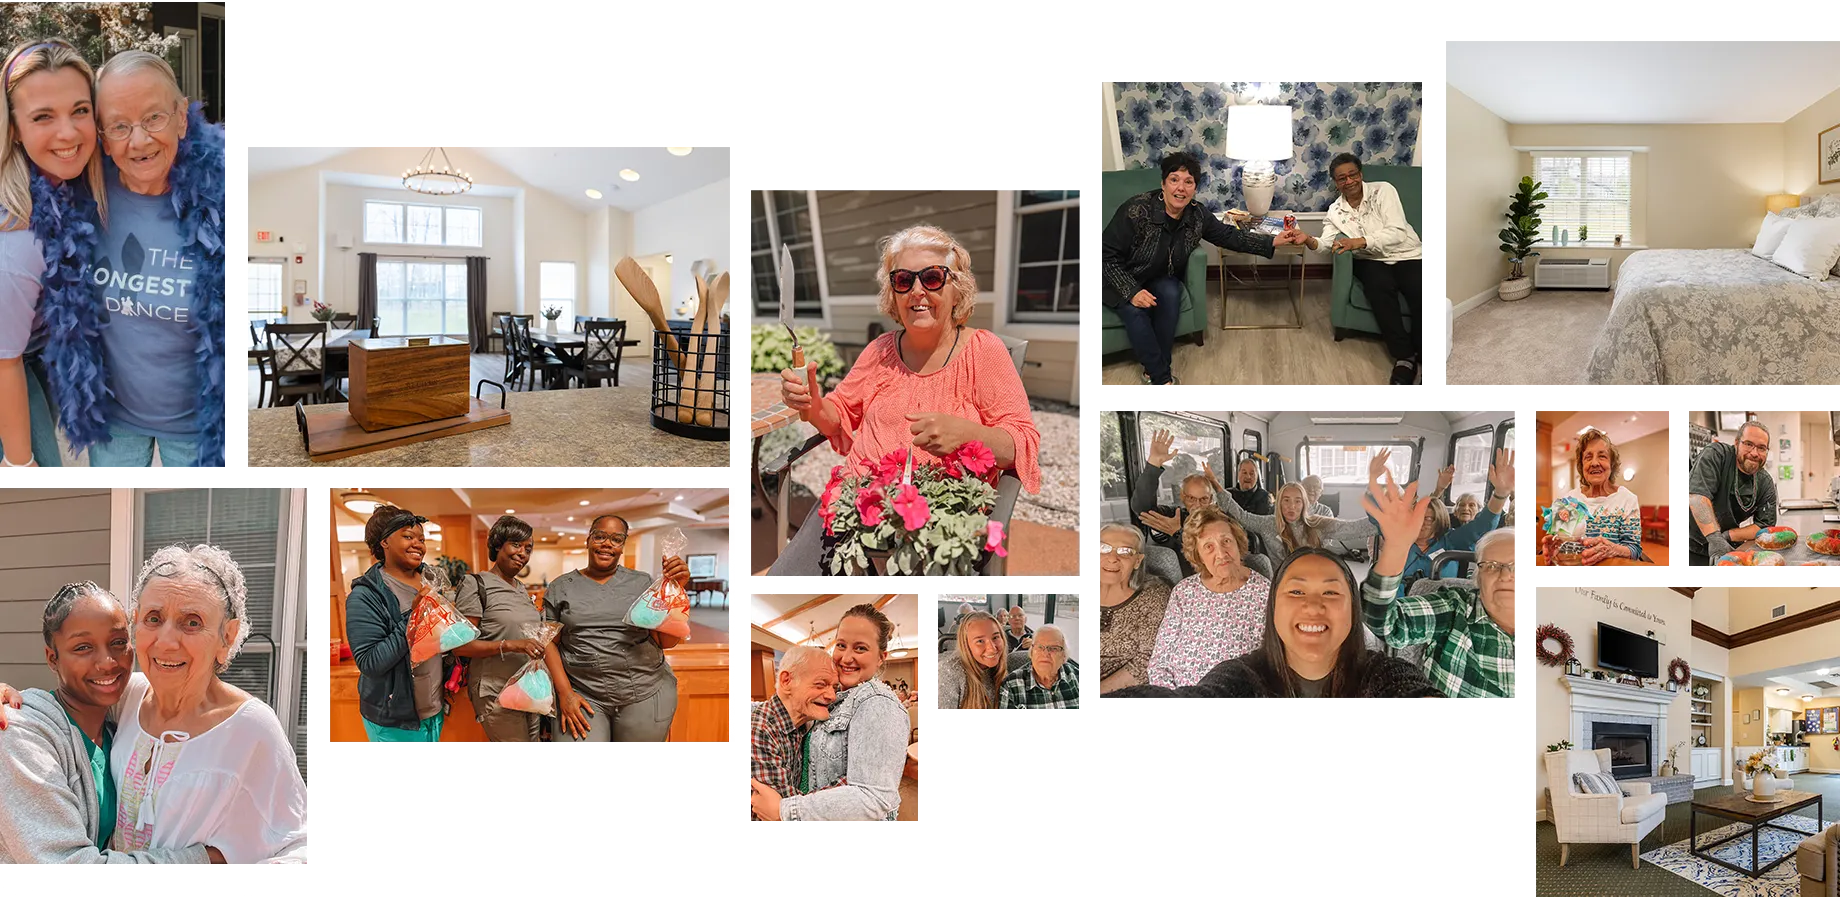 Home | Maple Ridge Senior Living